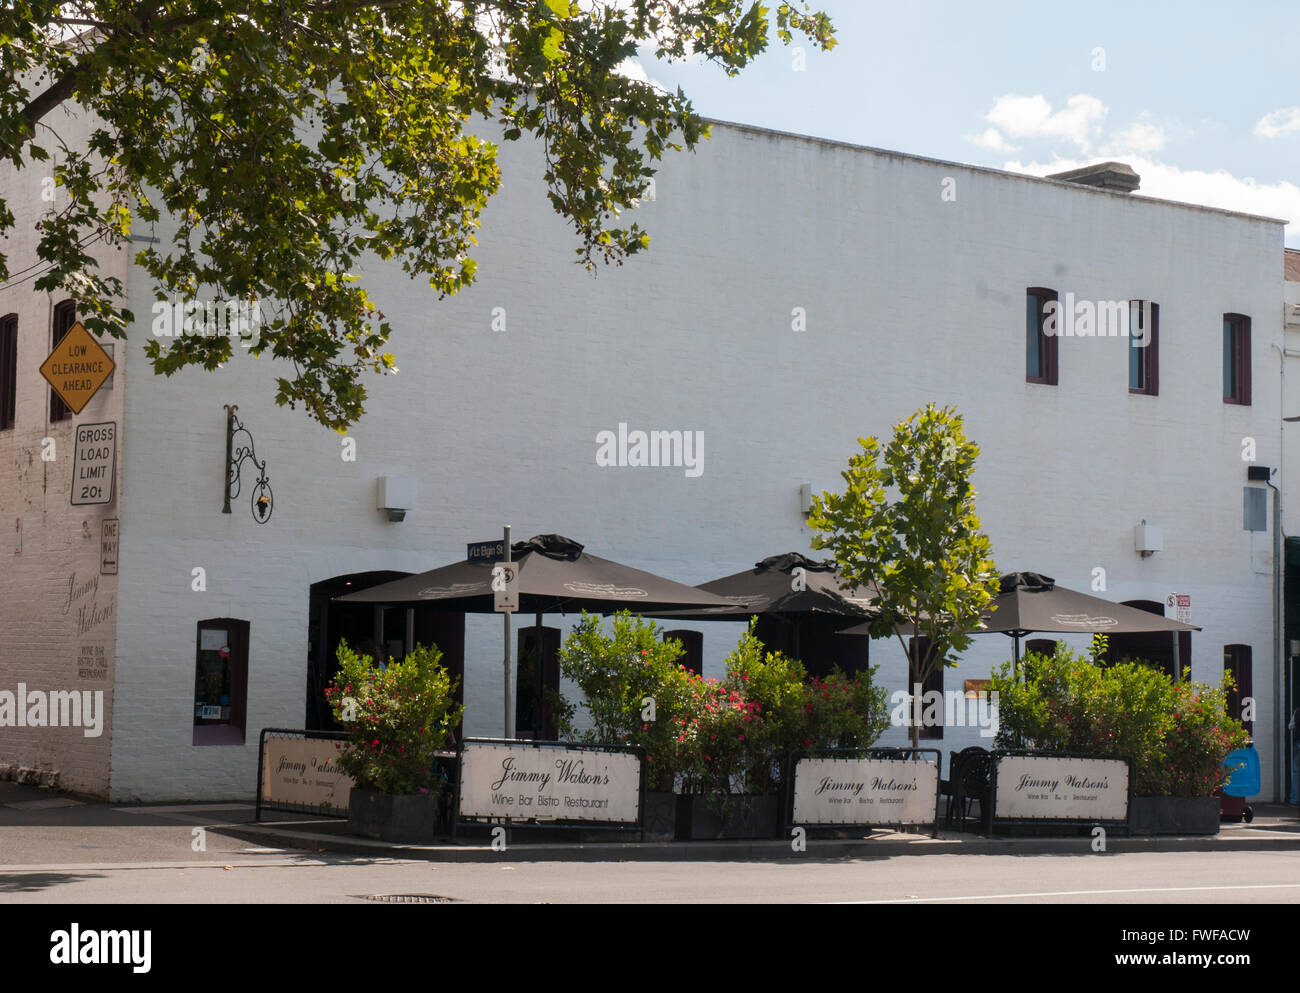 Jimmy Waton's Wine Bar in Lygon Street, Carlton, Melbourne, Australia Stock Photo